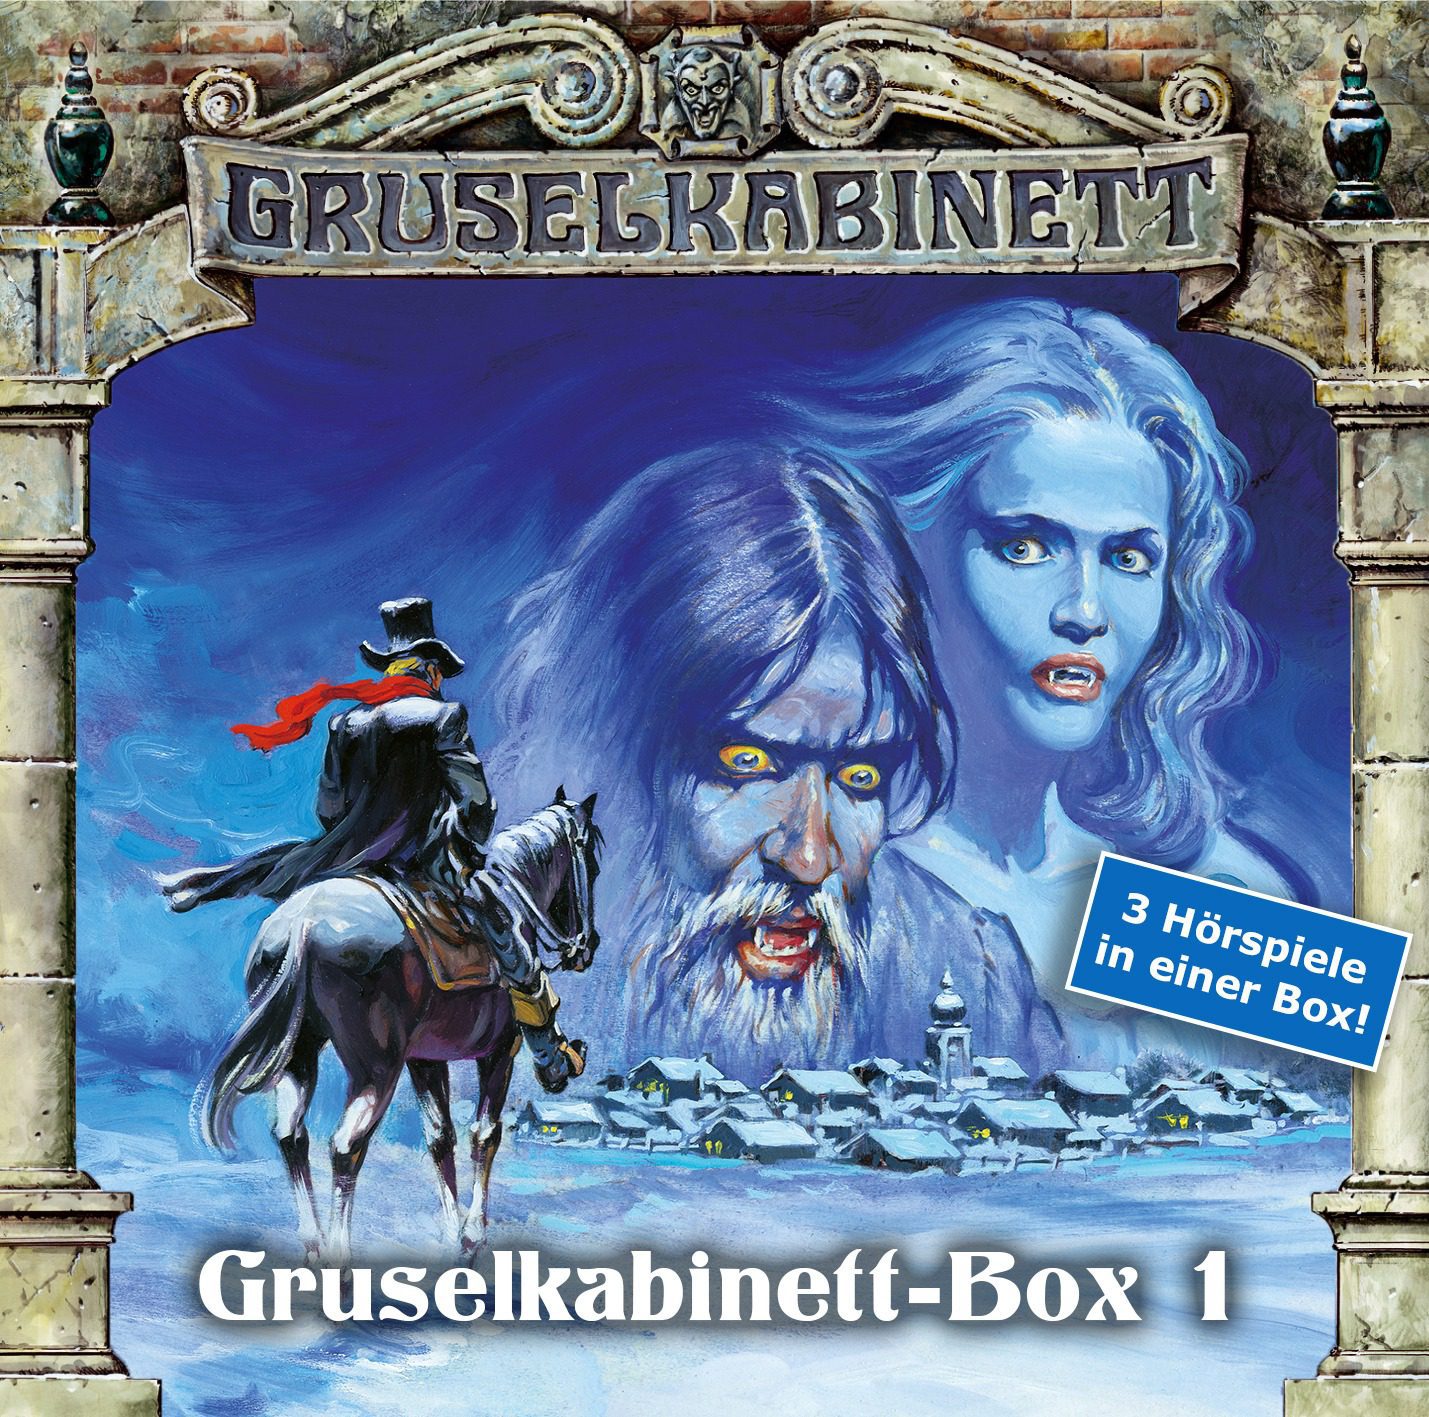 Gruselkabinett-Box 1